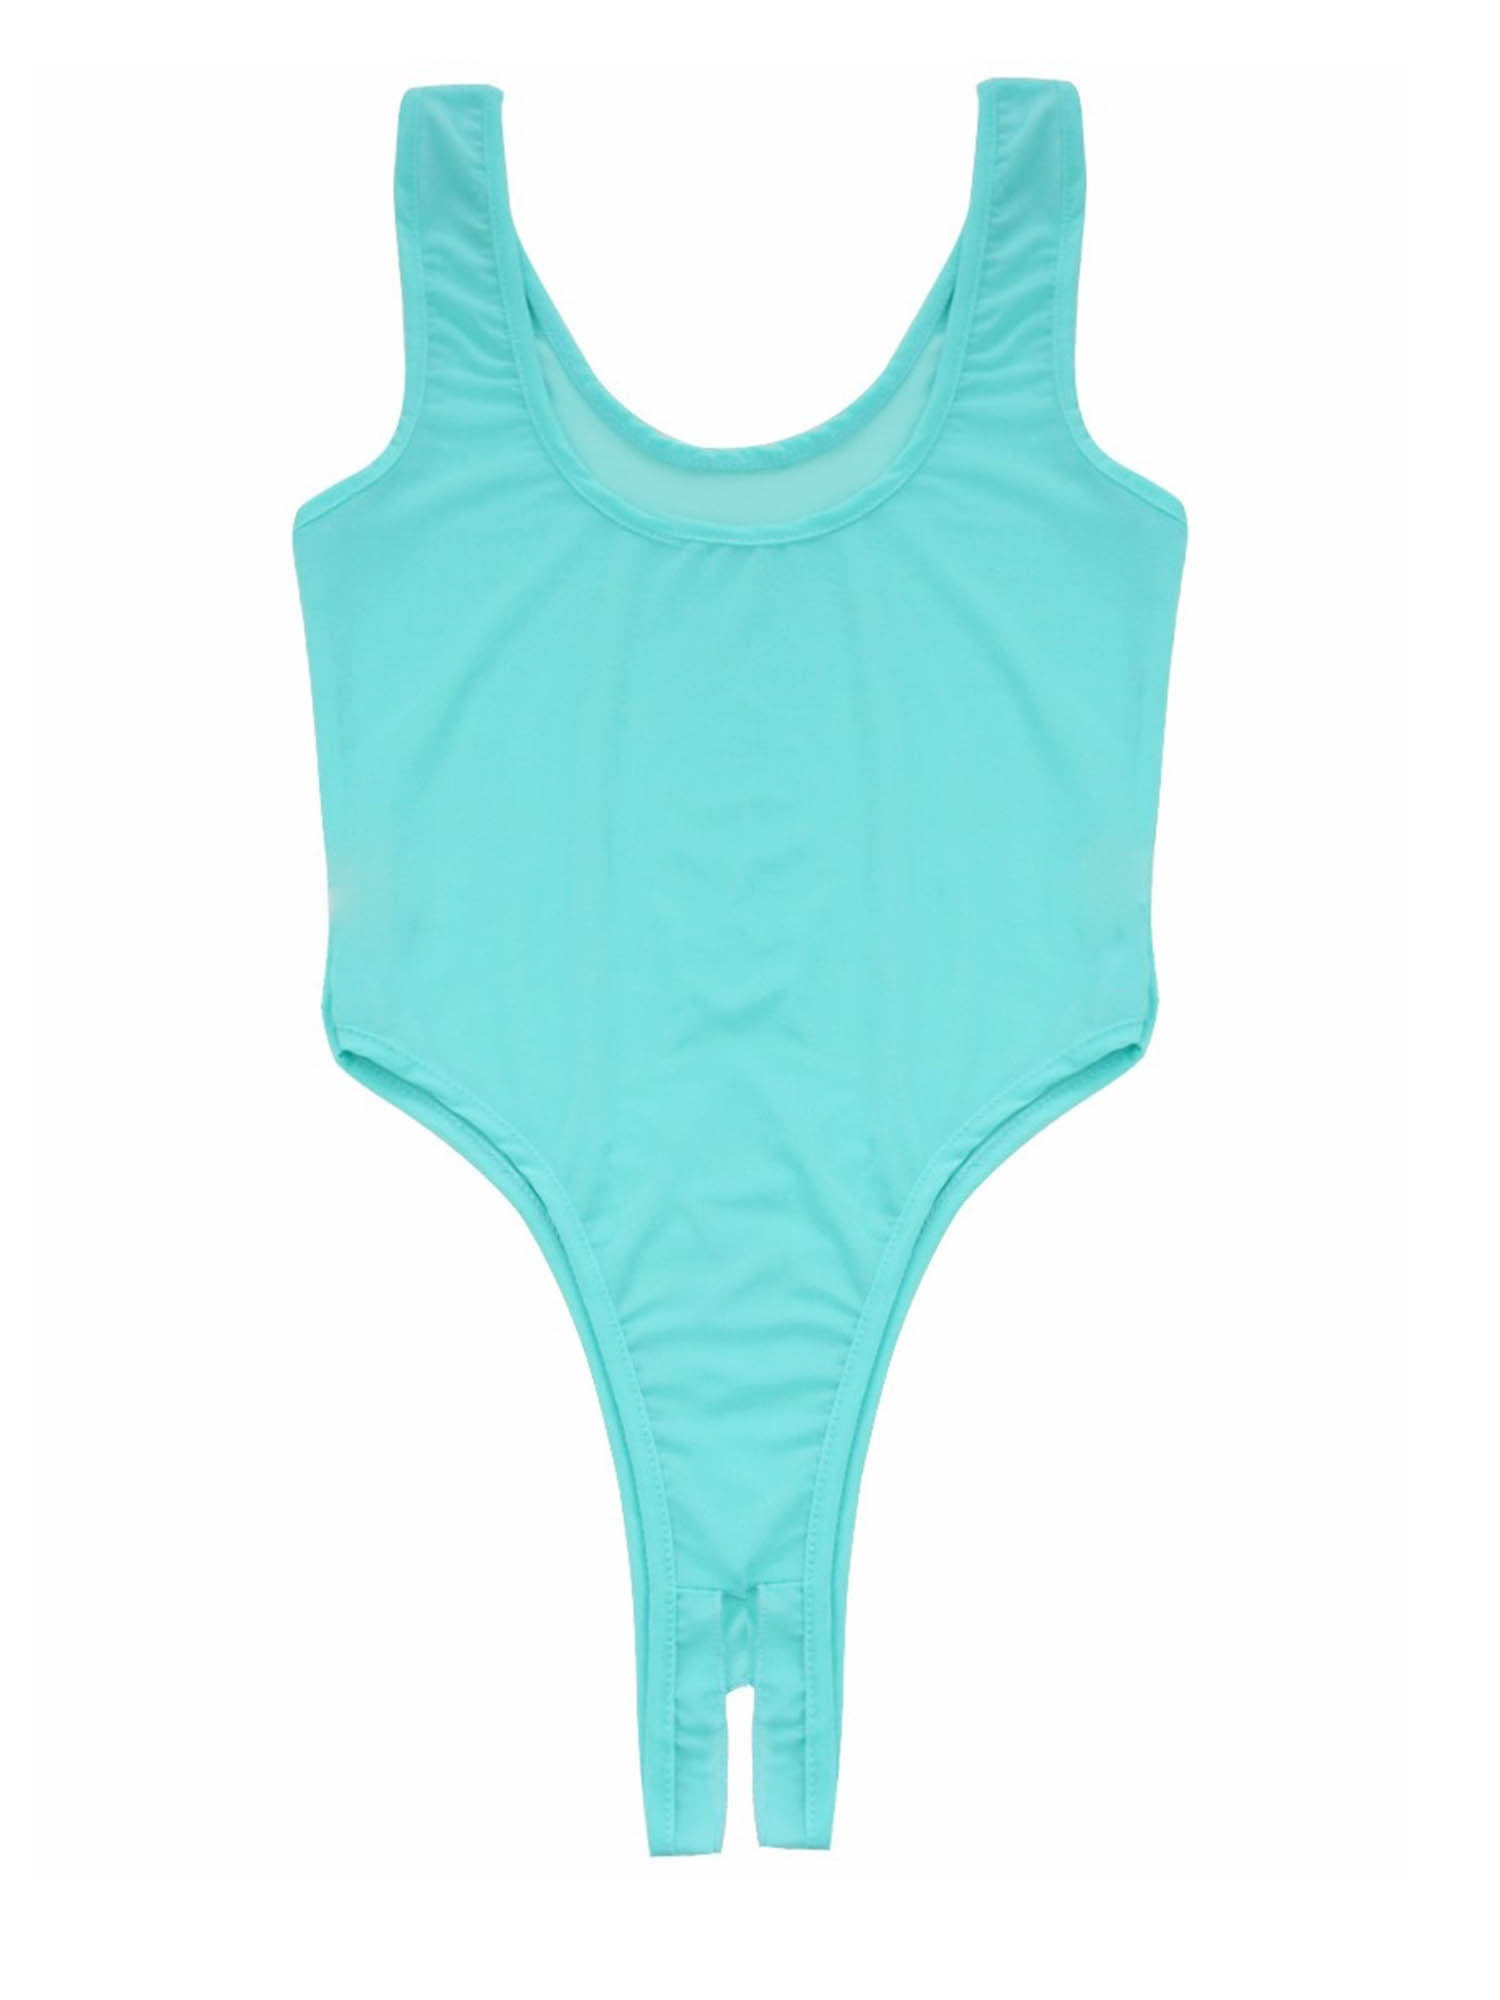 DPOIS Women's Stretchy High Cut Thong Monokini Swimwear Bodysuit Leotard  Lavender One Size